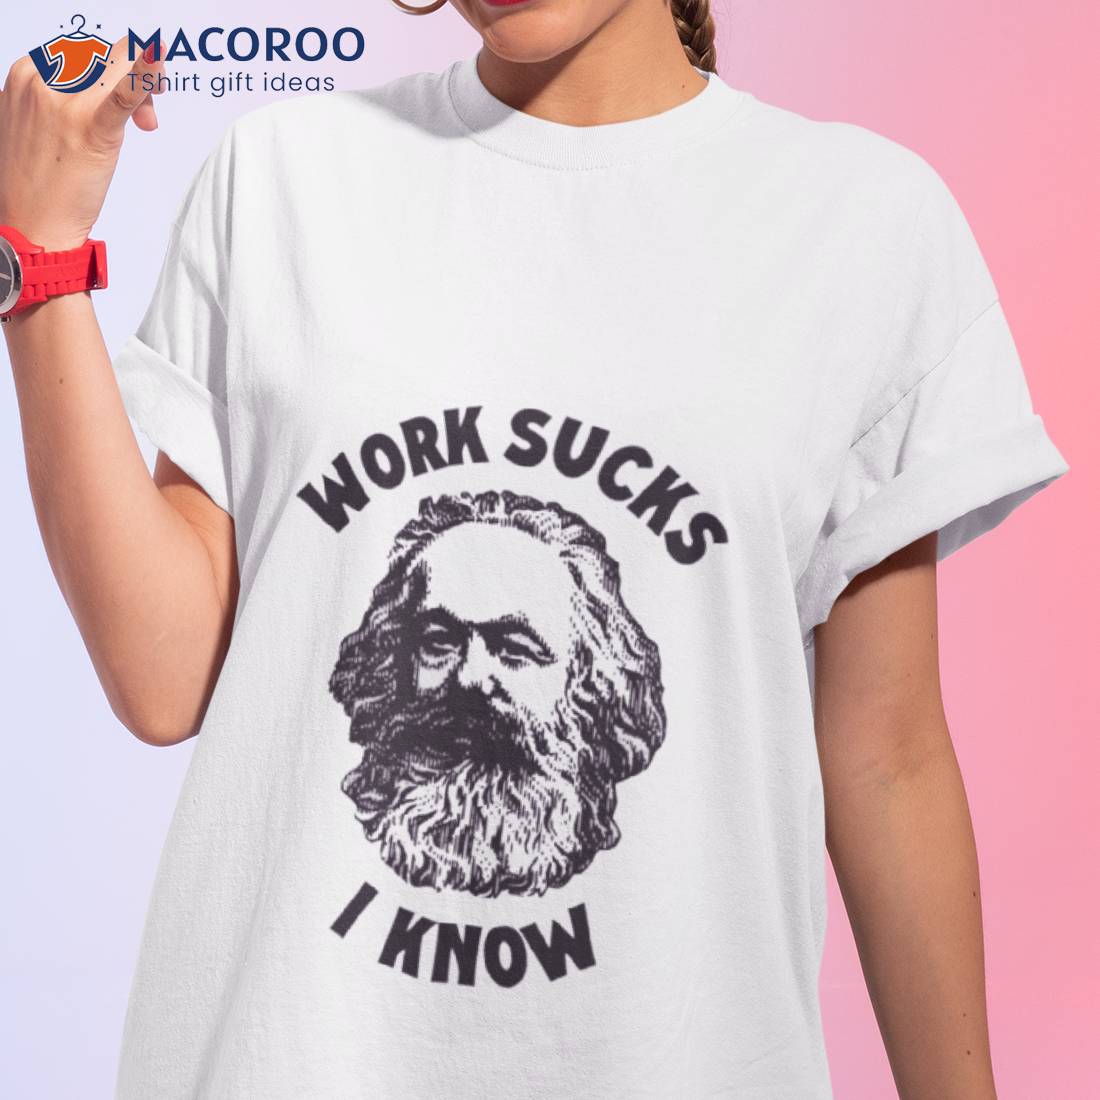 https://images.macoroo.com/wp-content/uploads/2023/06/work-sucks-i-know-shirt-tshirt-1.jpg